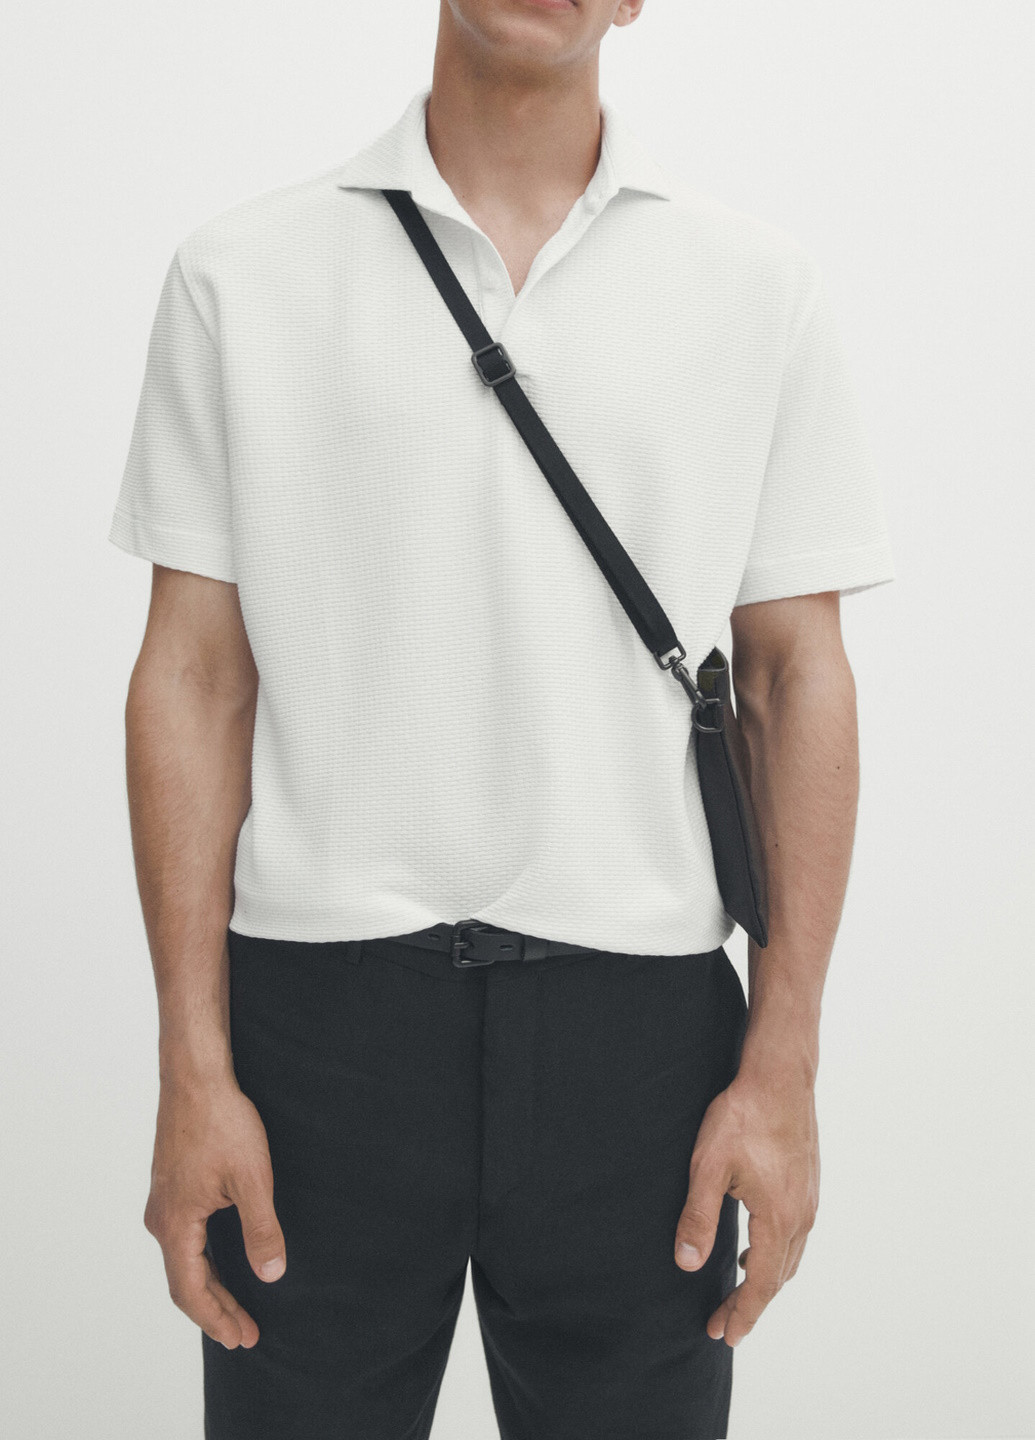 Белая футболка-поло для мужчин Massimo Dutti